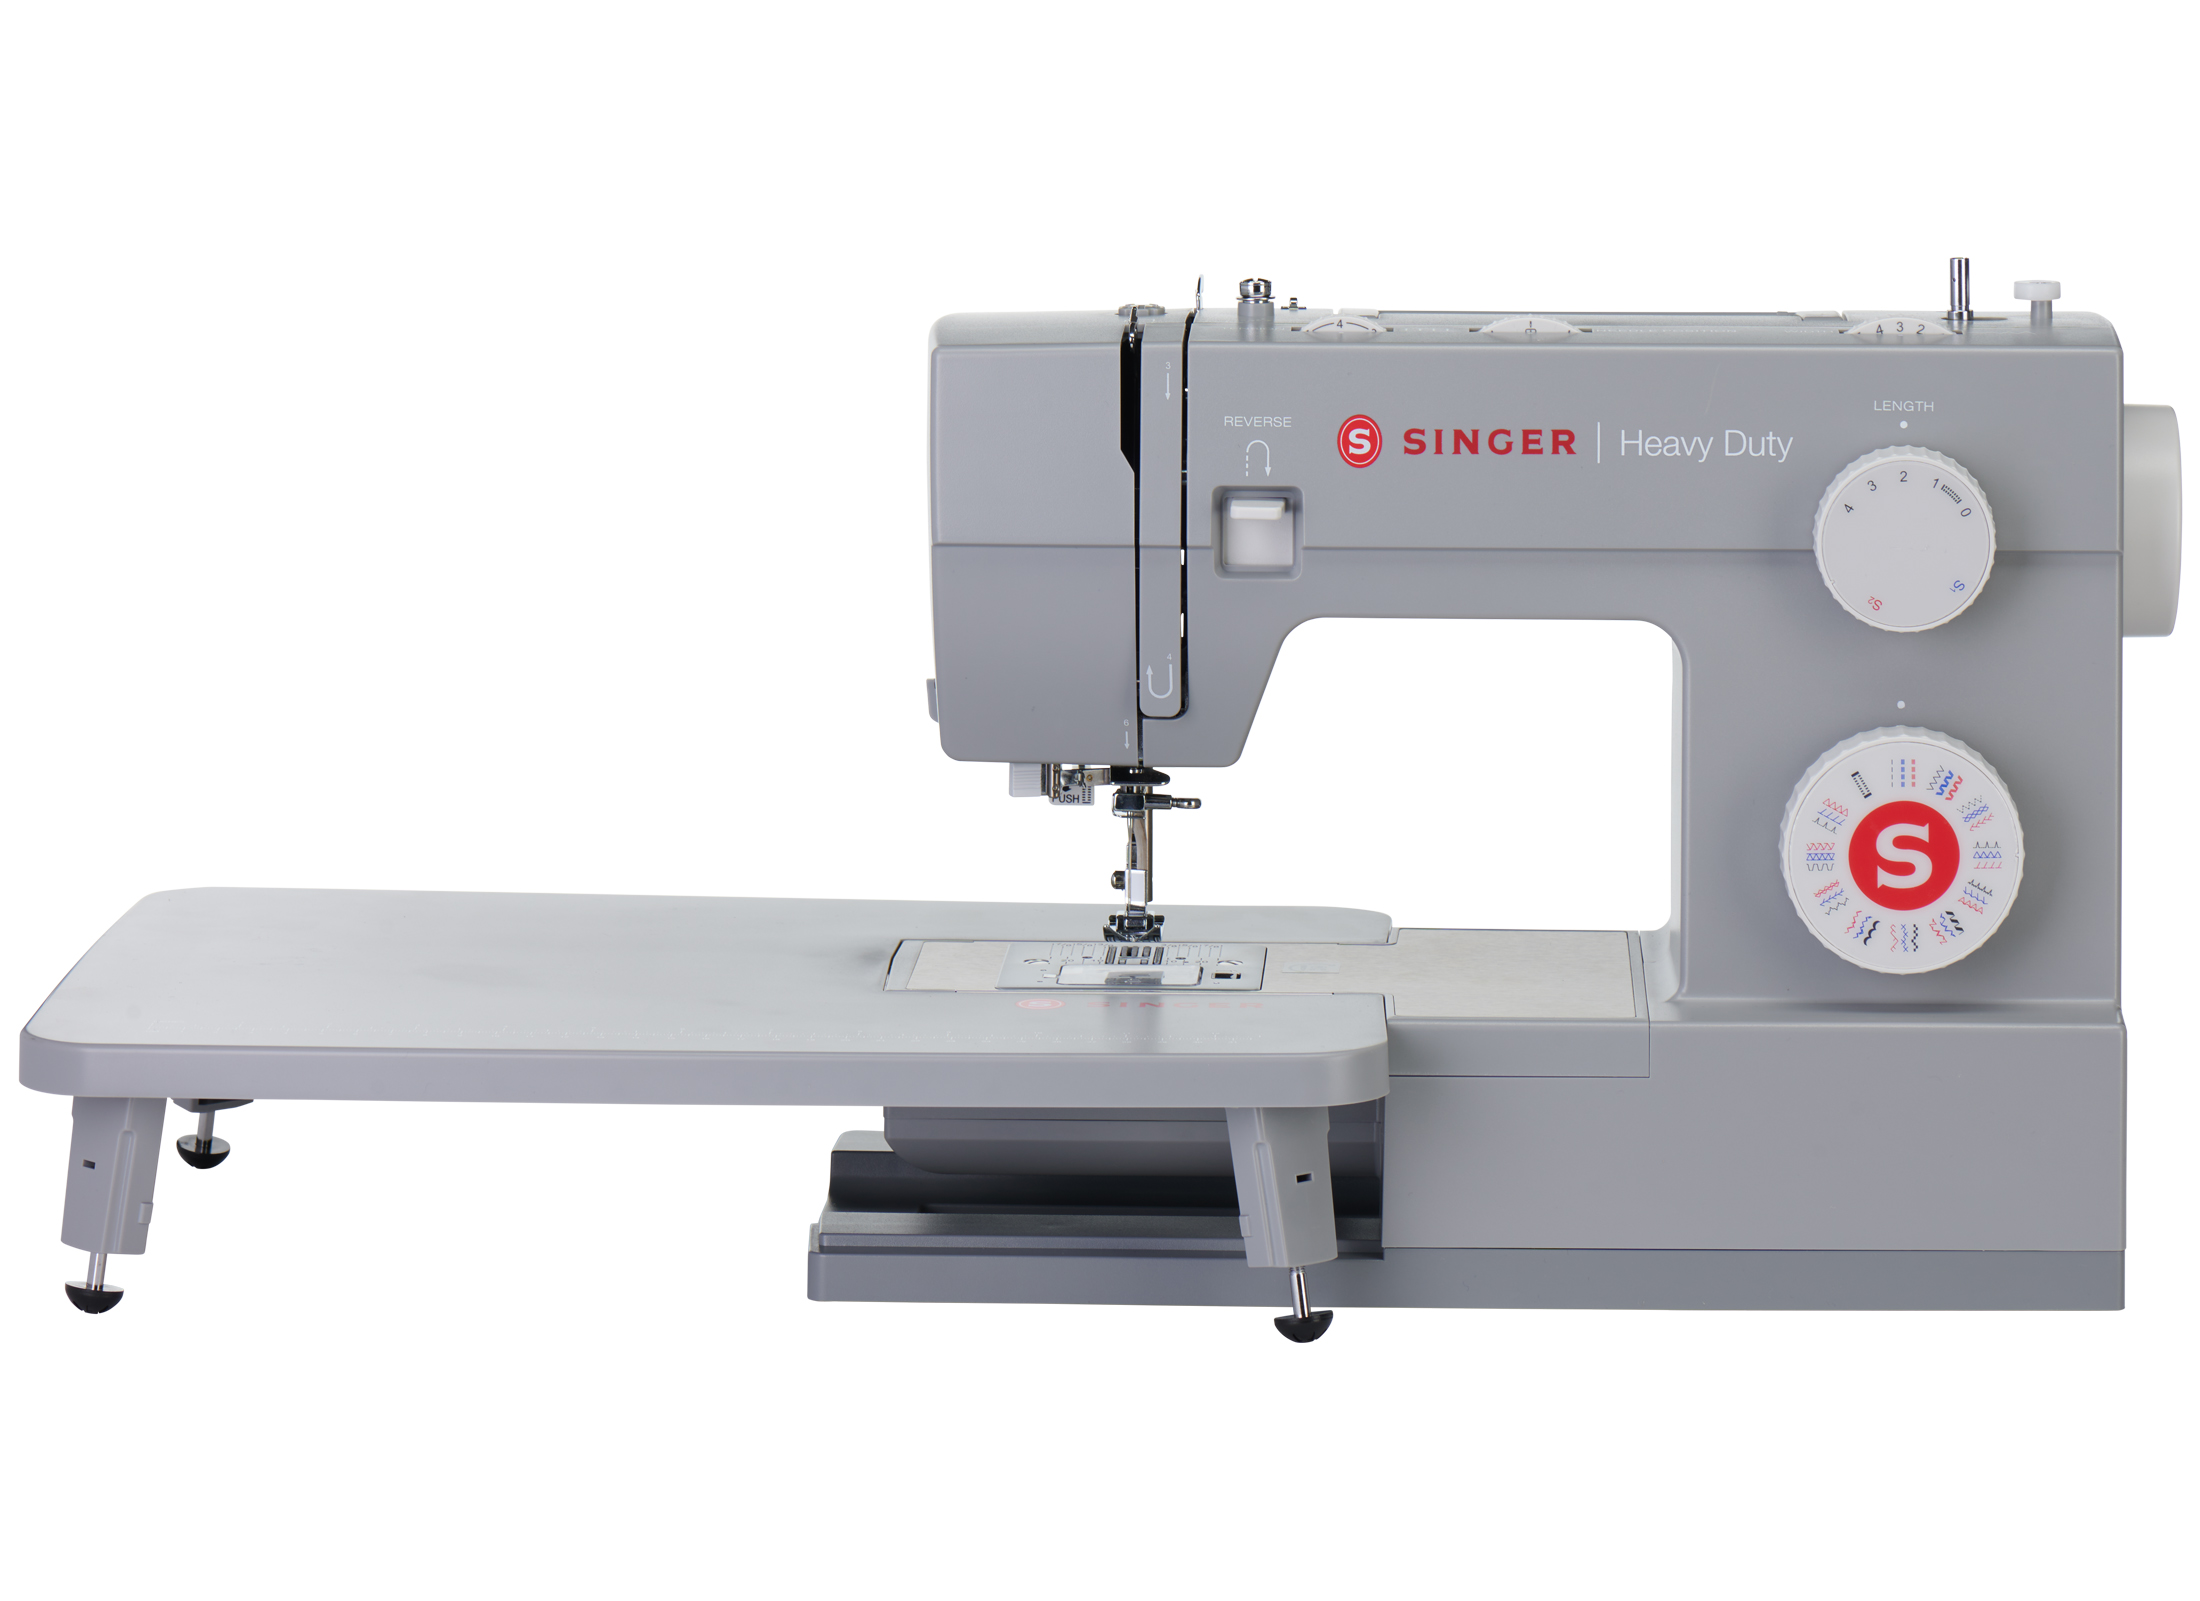 SINGER Heavy Duty HD6380 Sewing Machine $200 $199.99